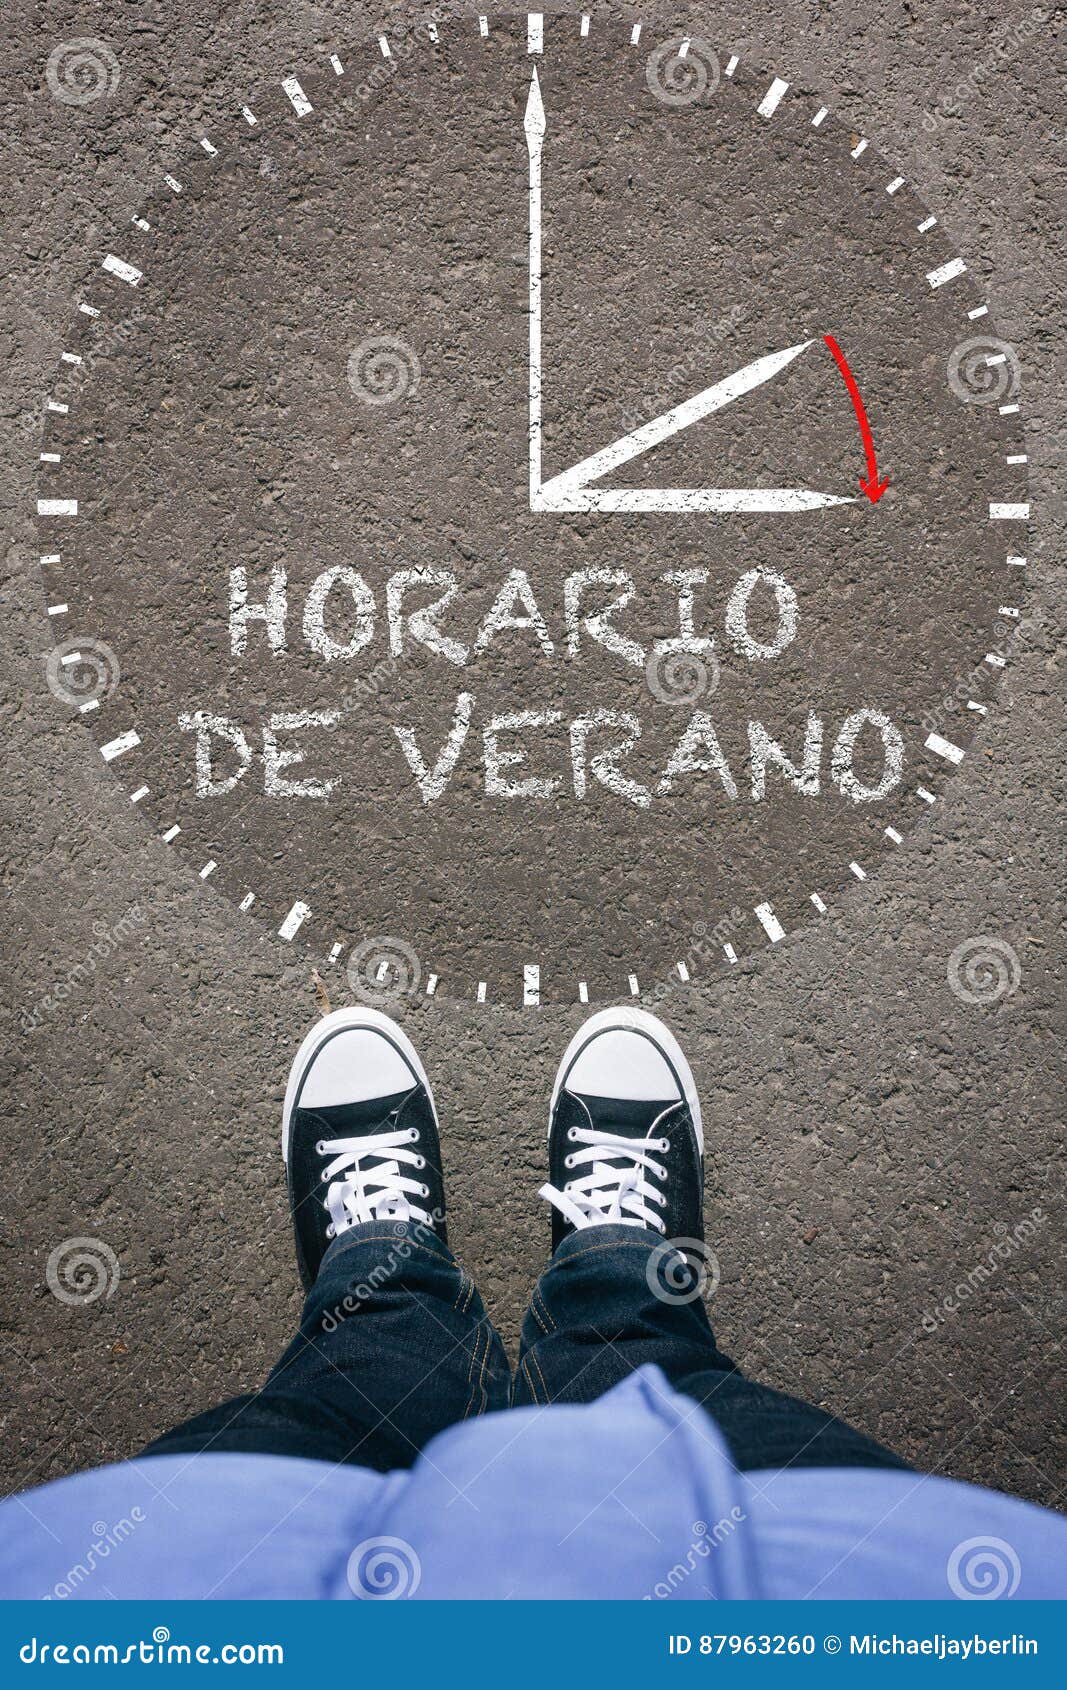 horario de verano, spanish daylight saving time on asphalt with